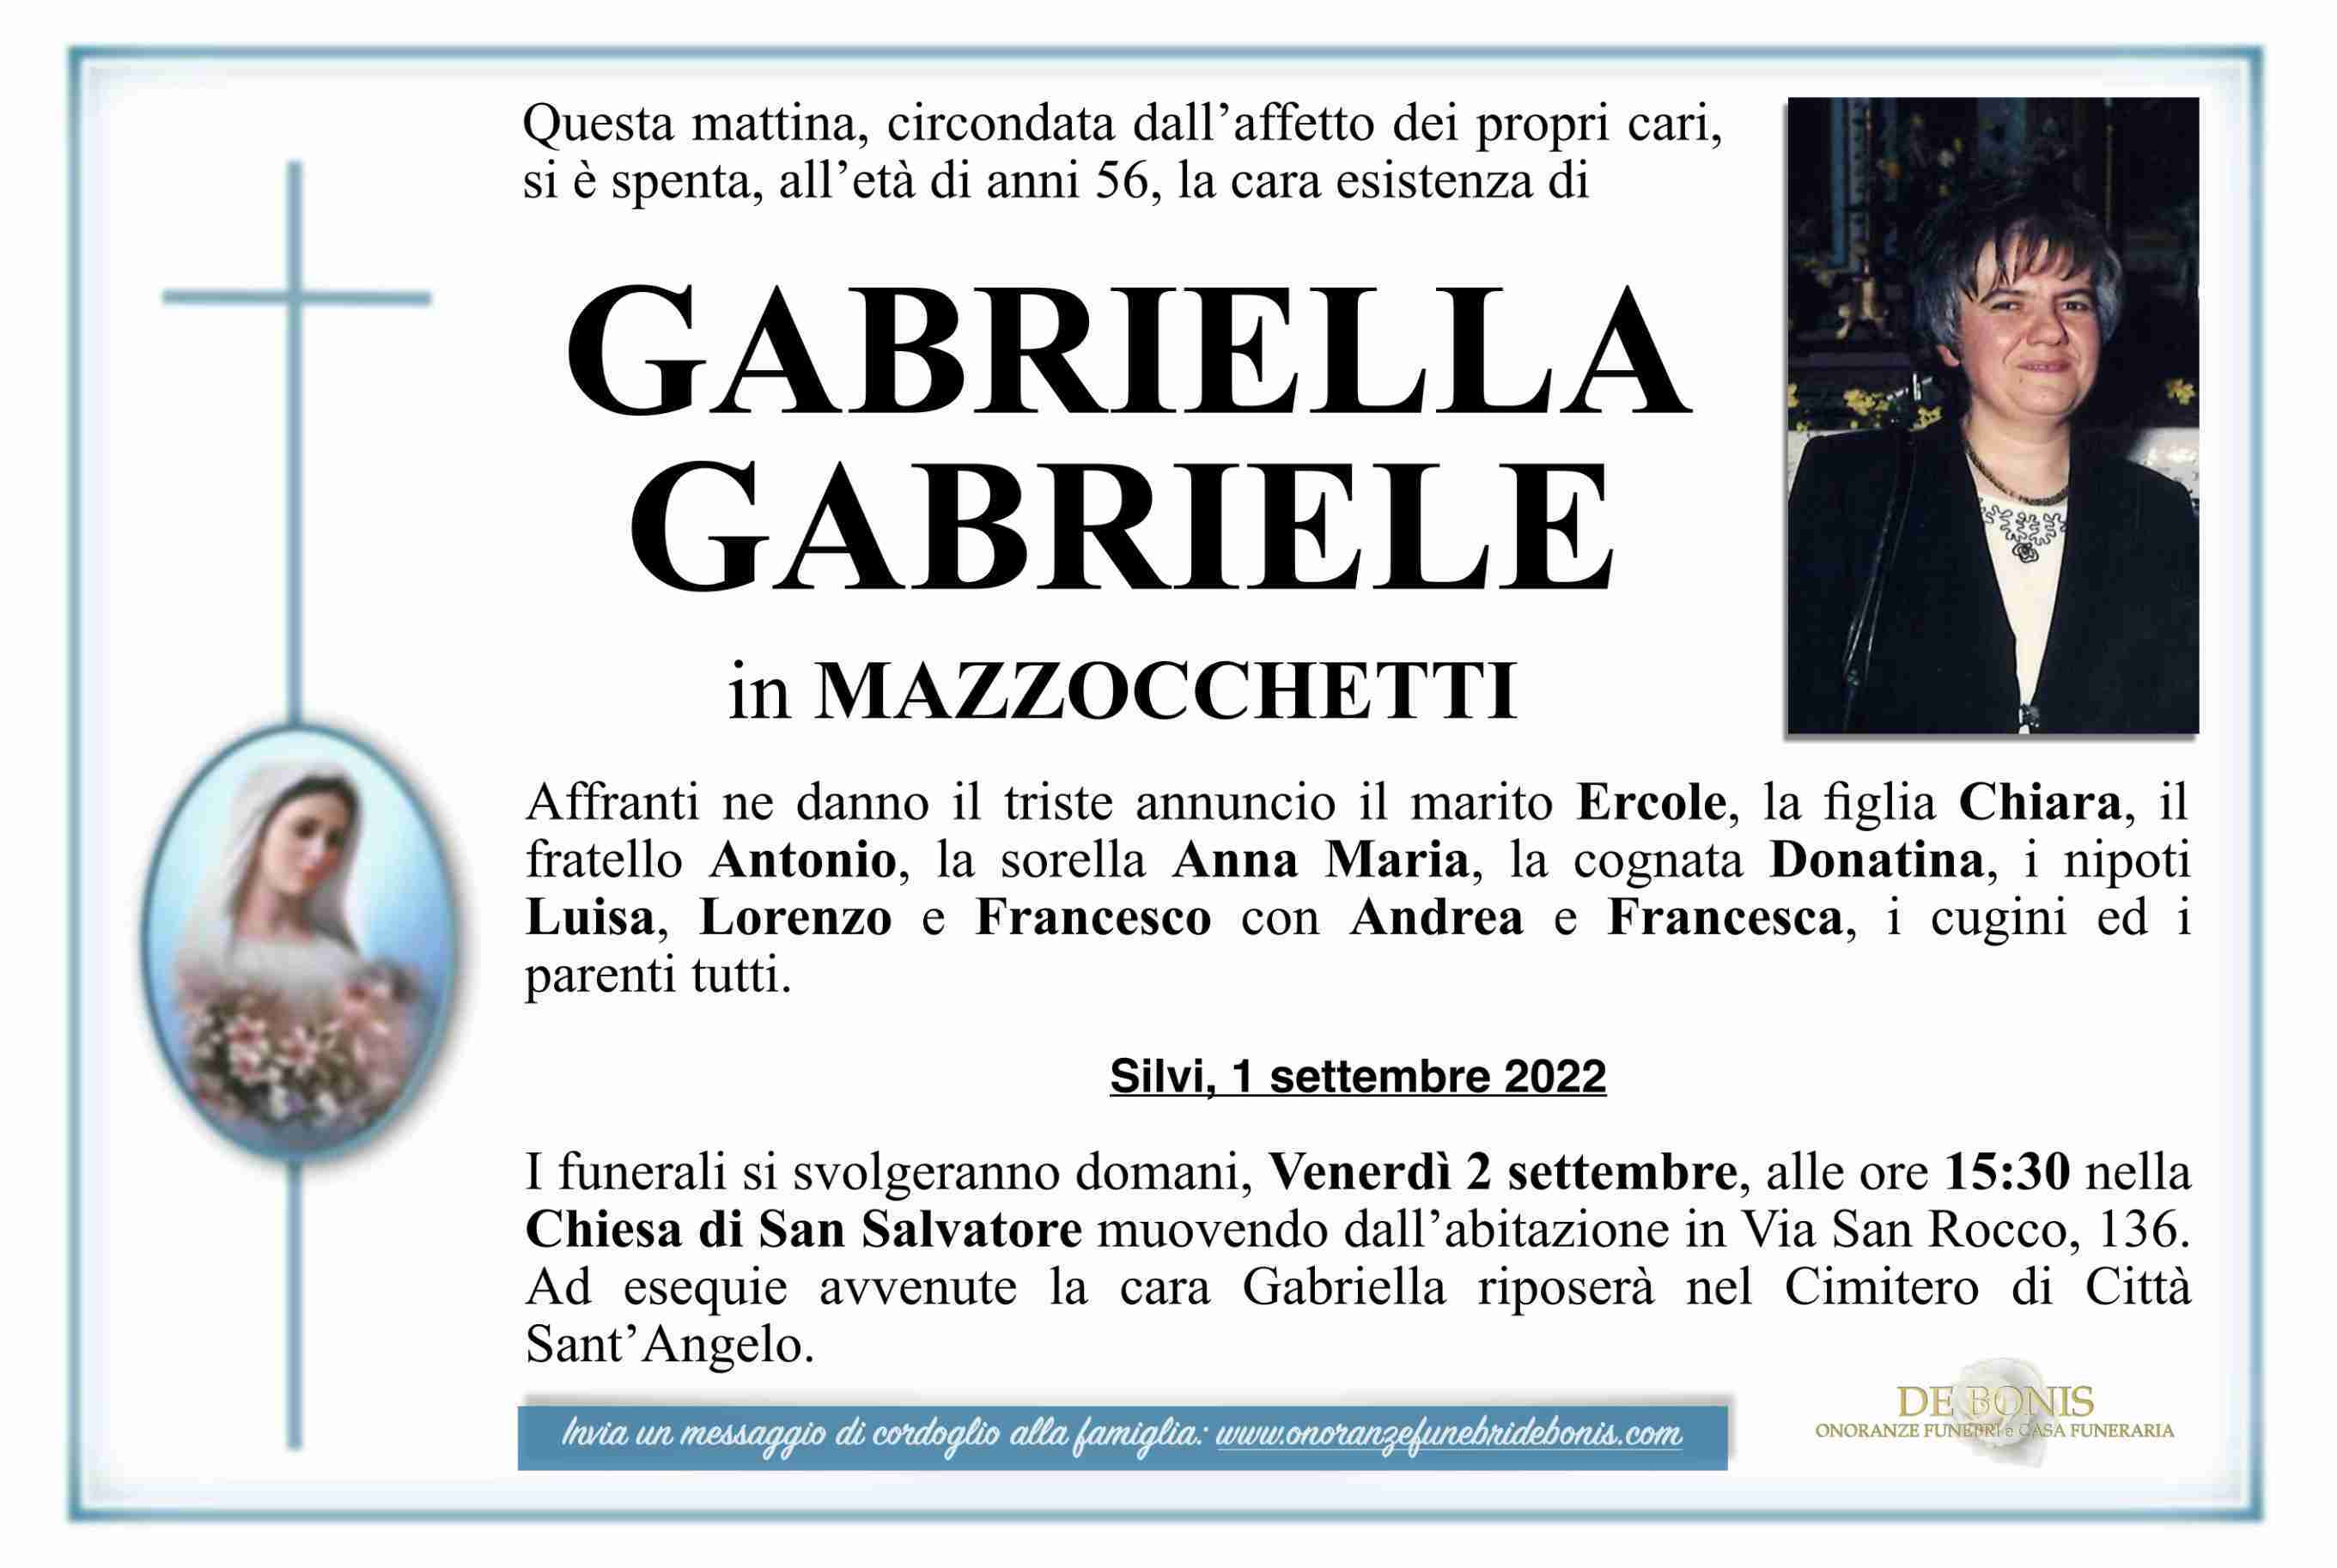 Gabriella Gabriele